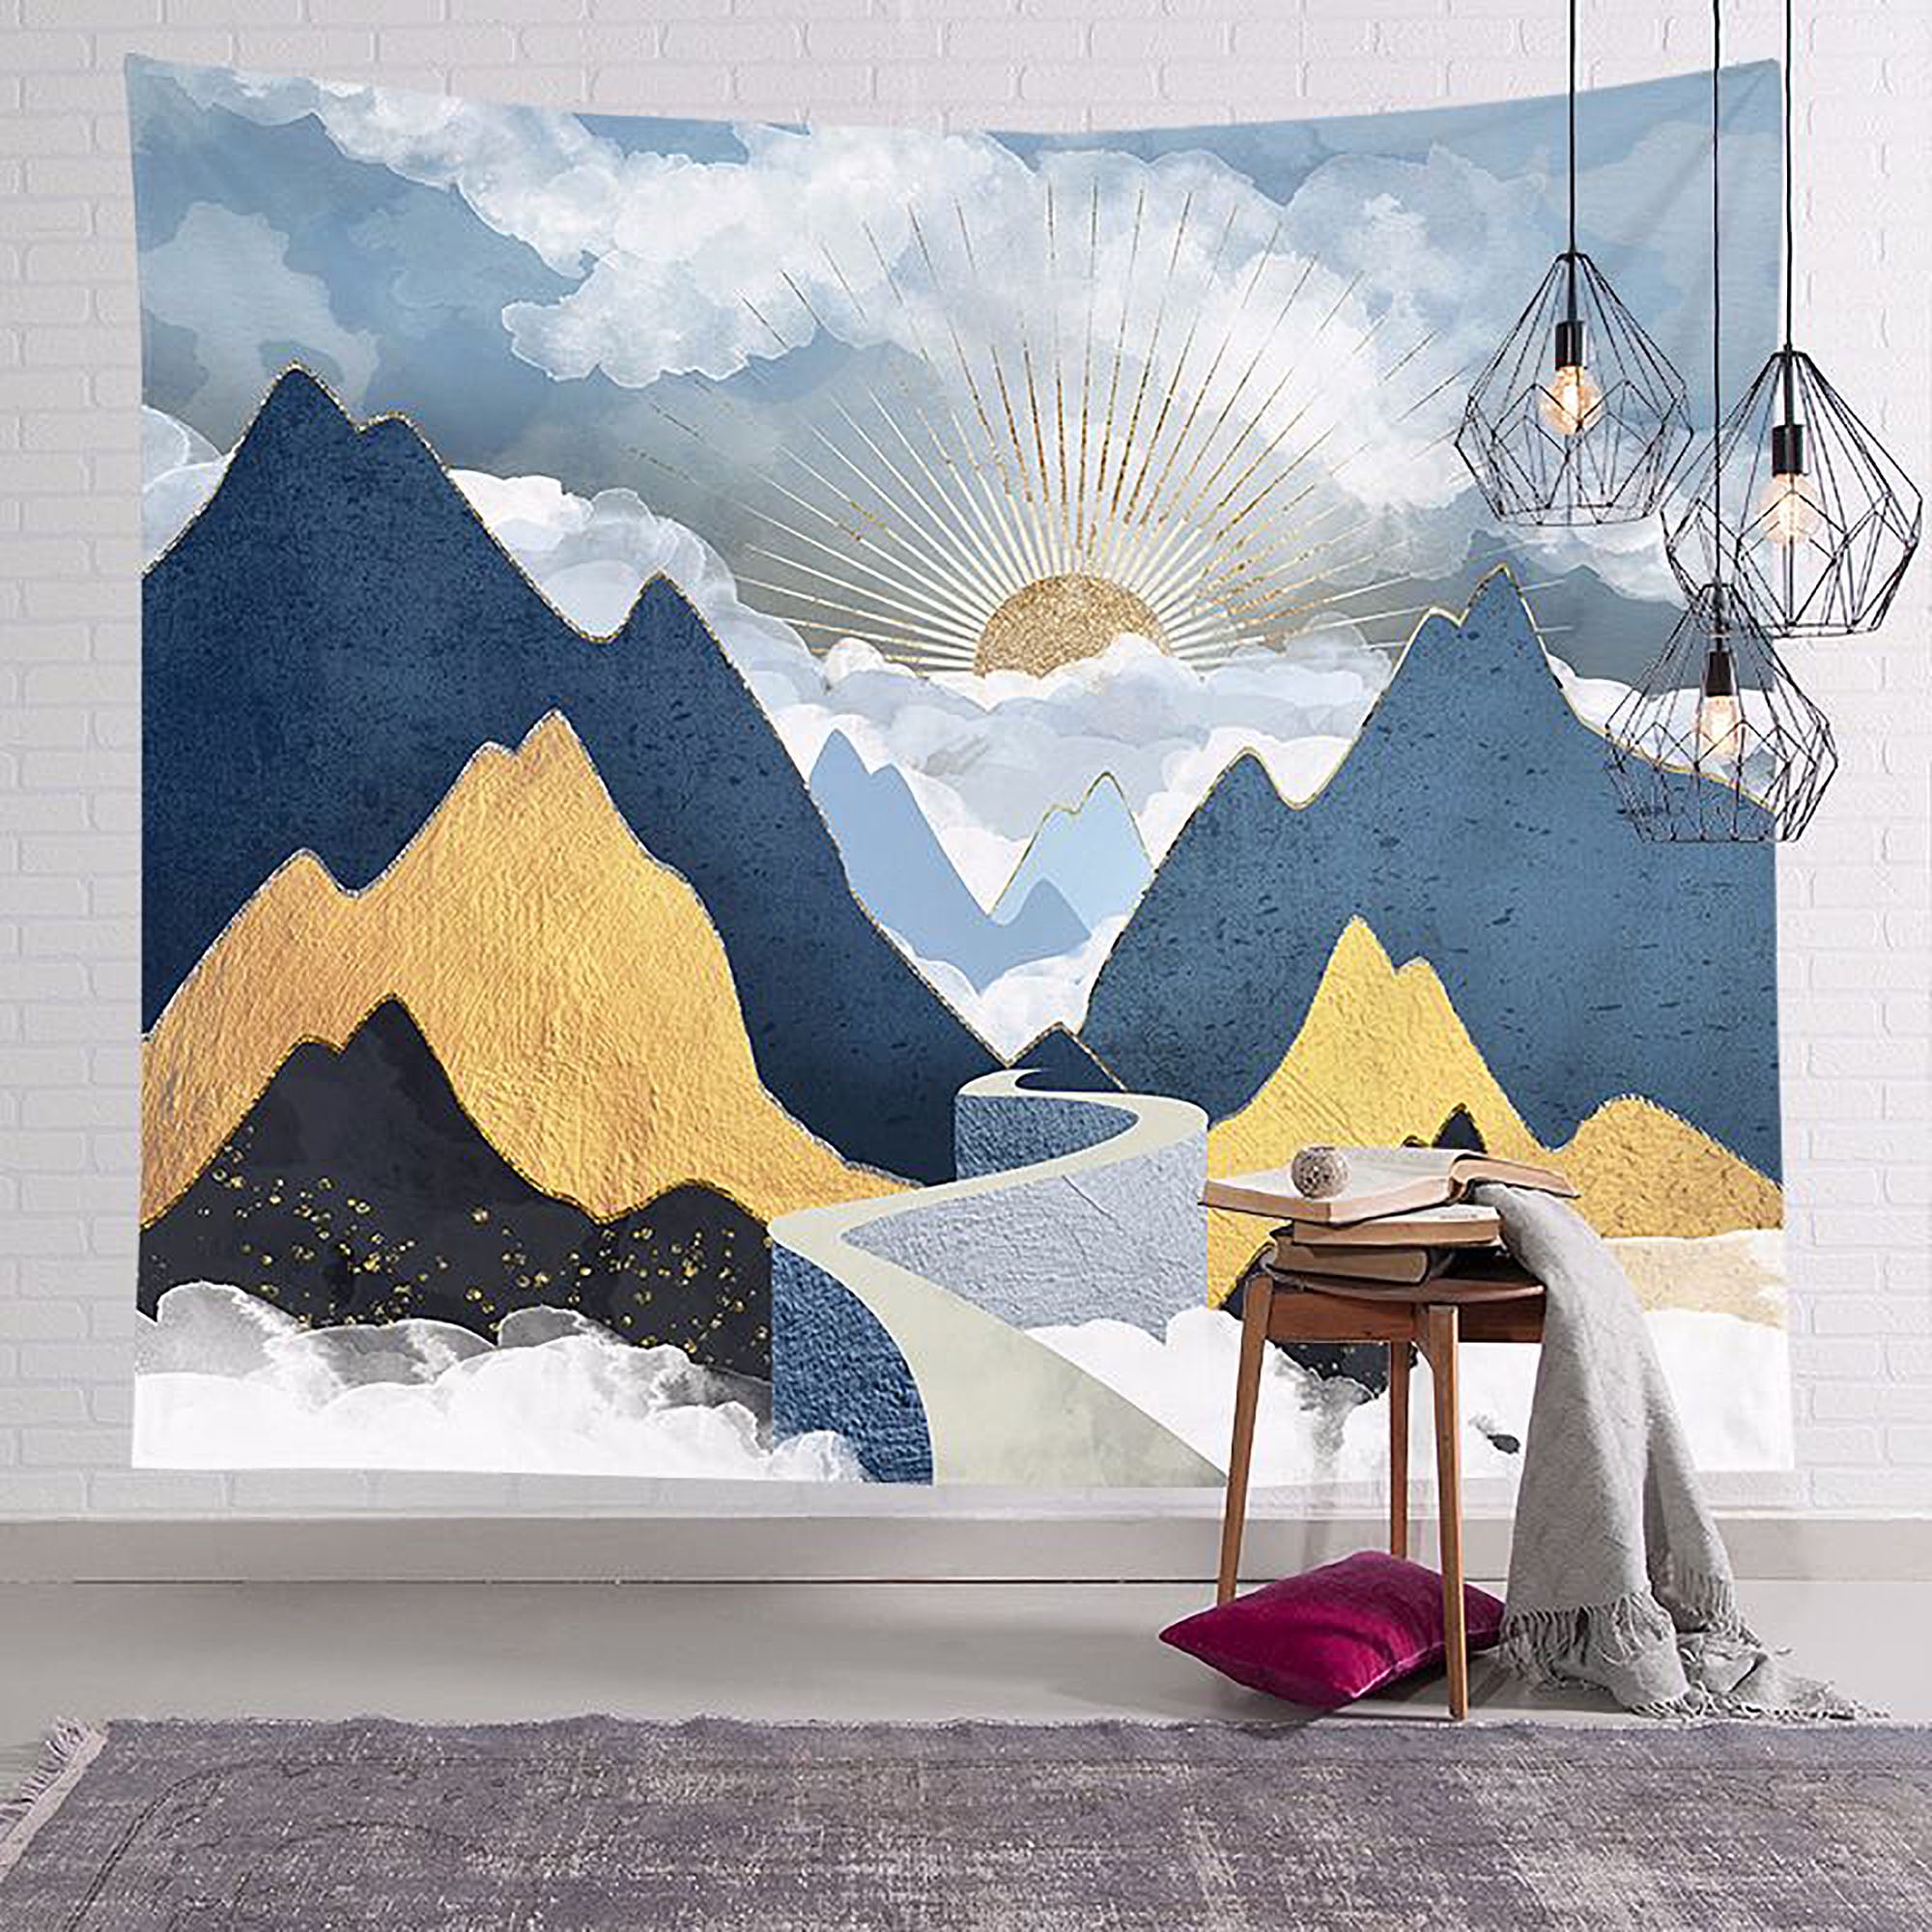 Mountain Ocean Tapestry Wall Hanging Cover Decor Carpet Blanket Yoga Mat Beach 